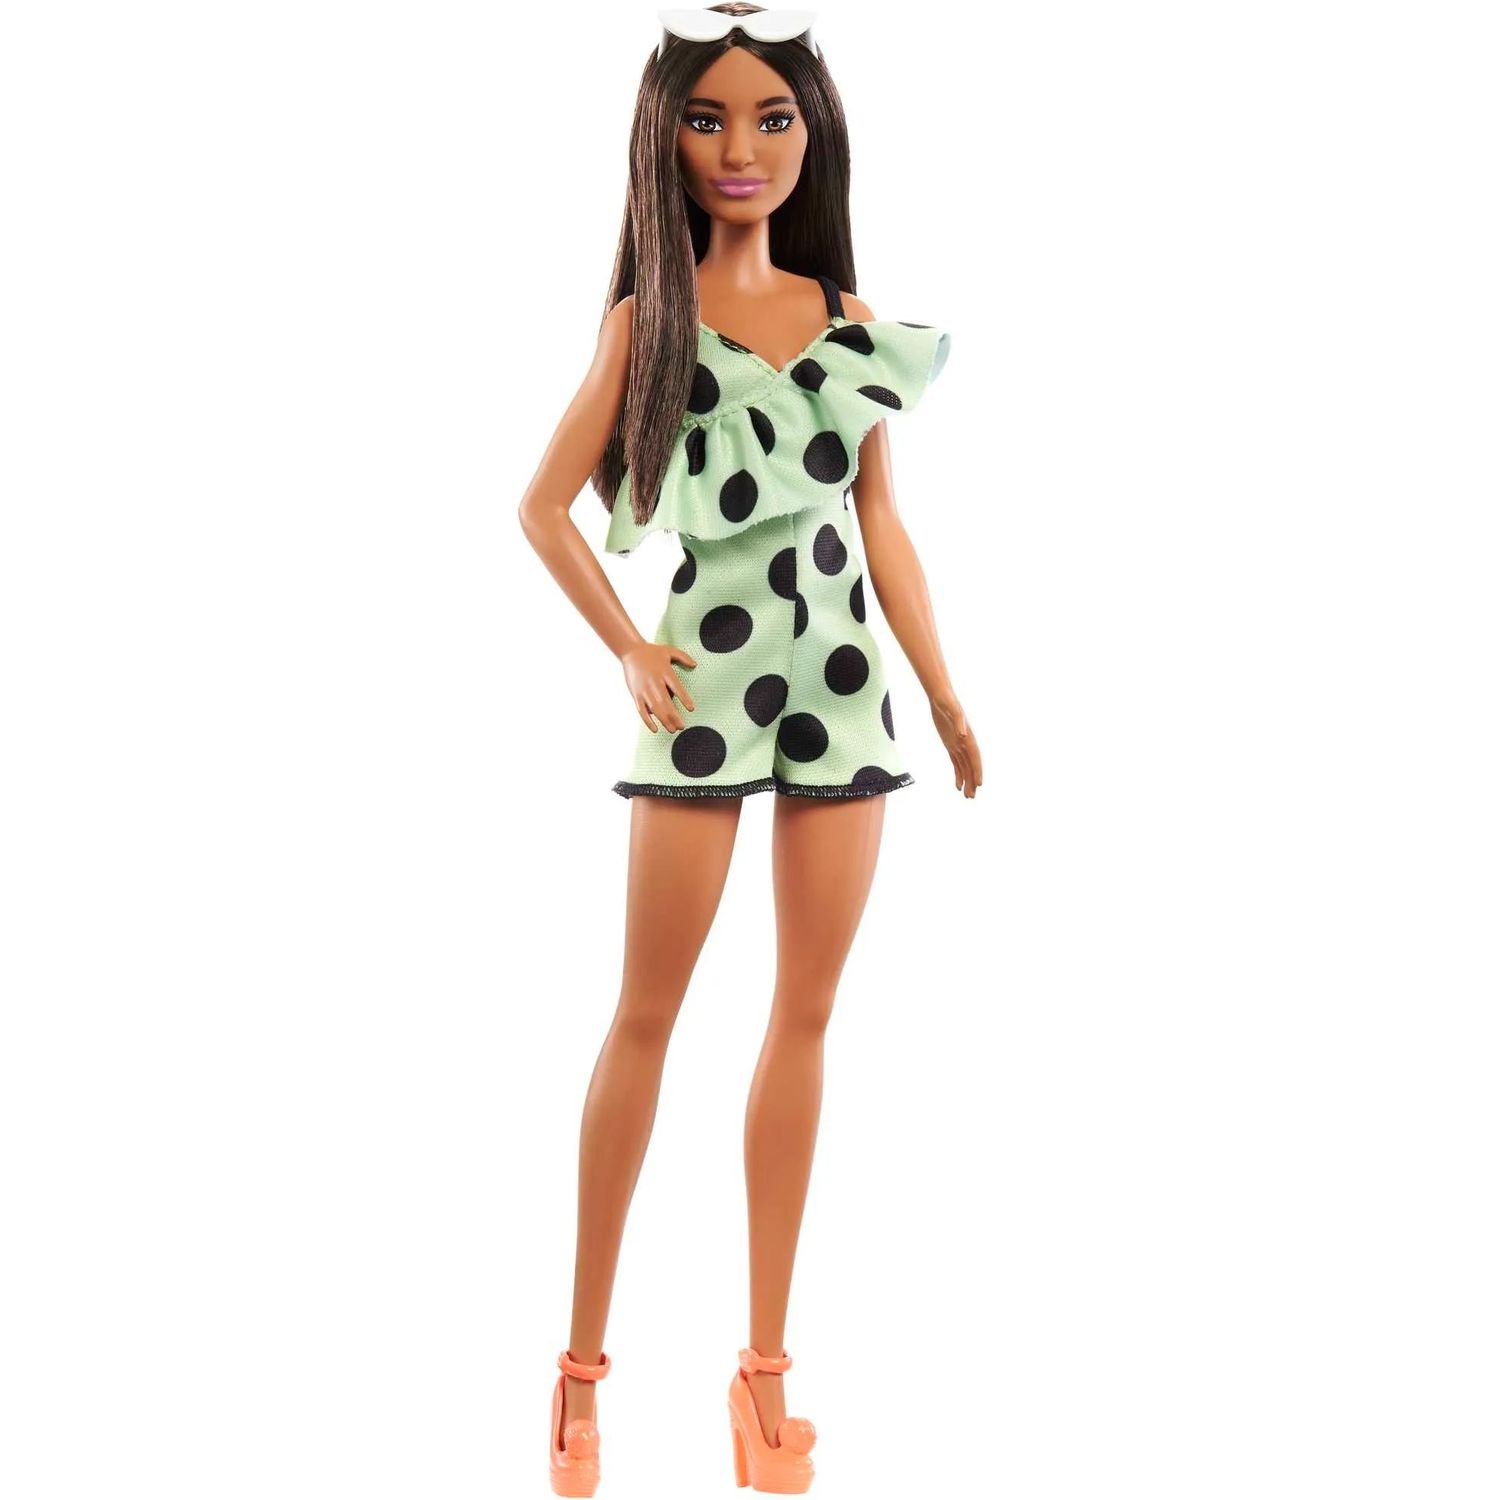 Кукла Barbie Модница в комбинезоне цвета лайм в горошек (HJR99) - фото 1